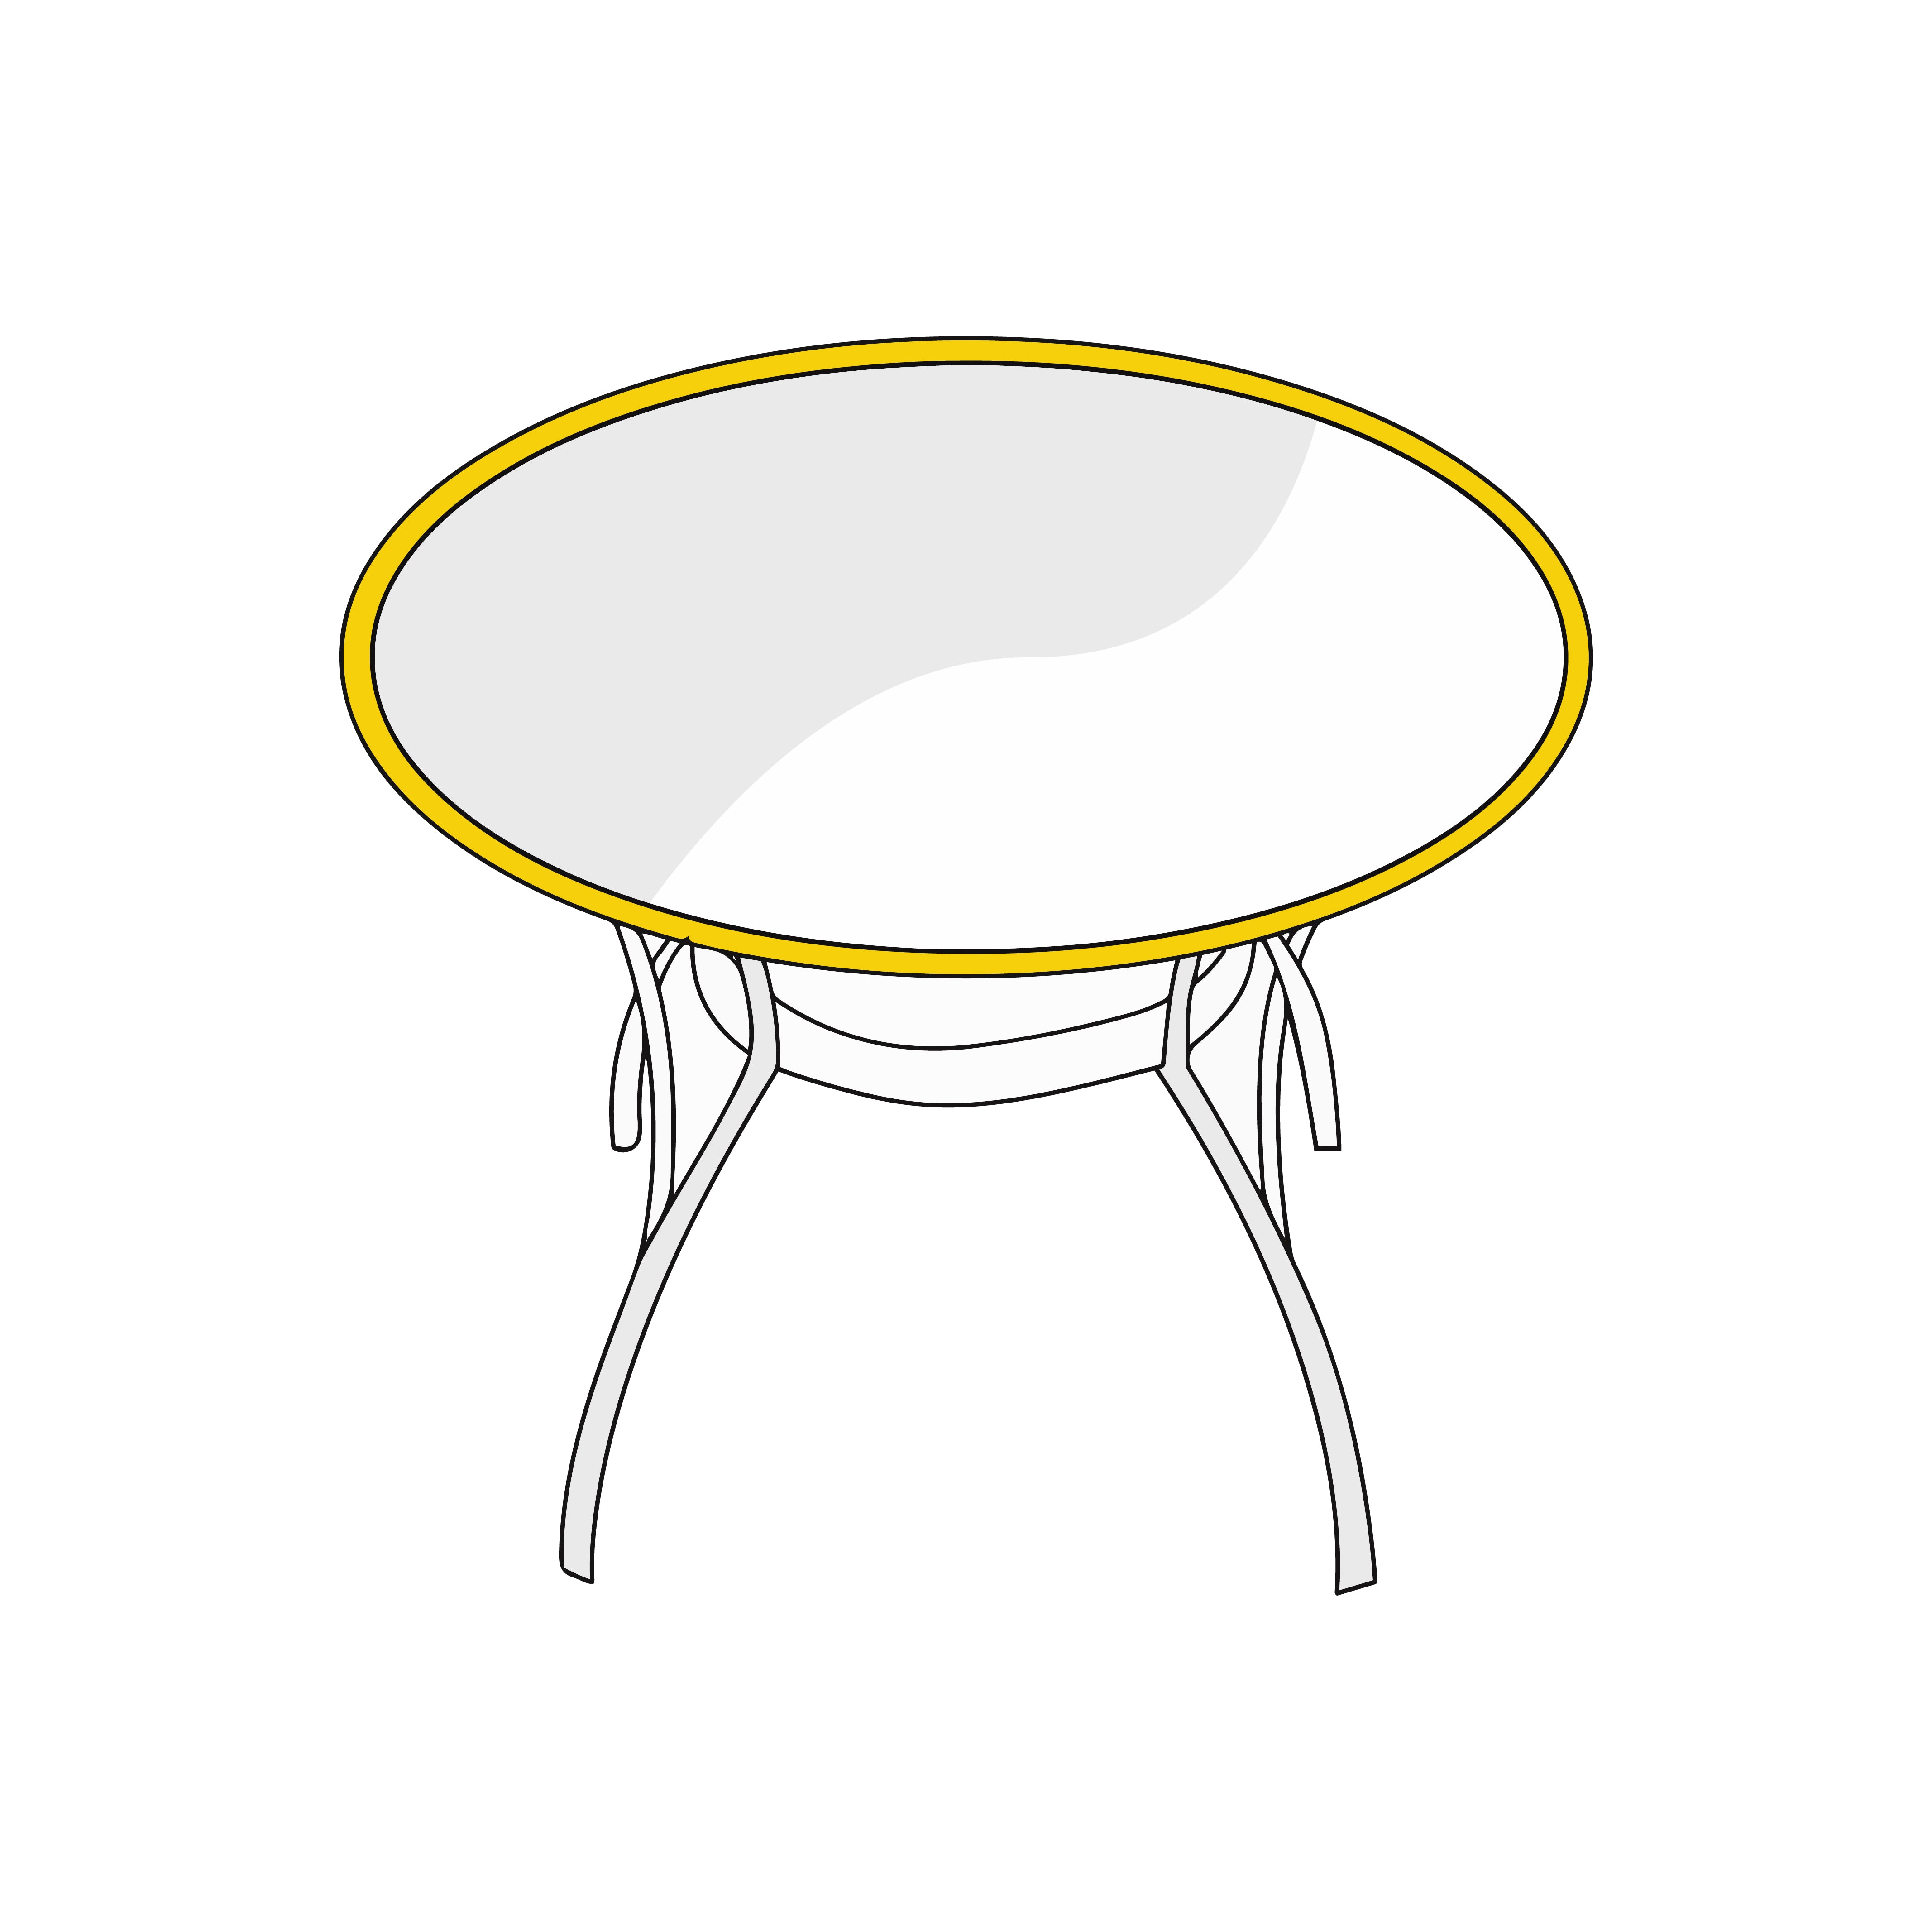 Custom Round Table Cover Model 2